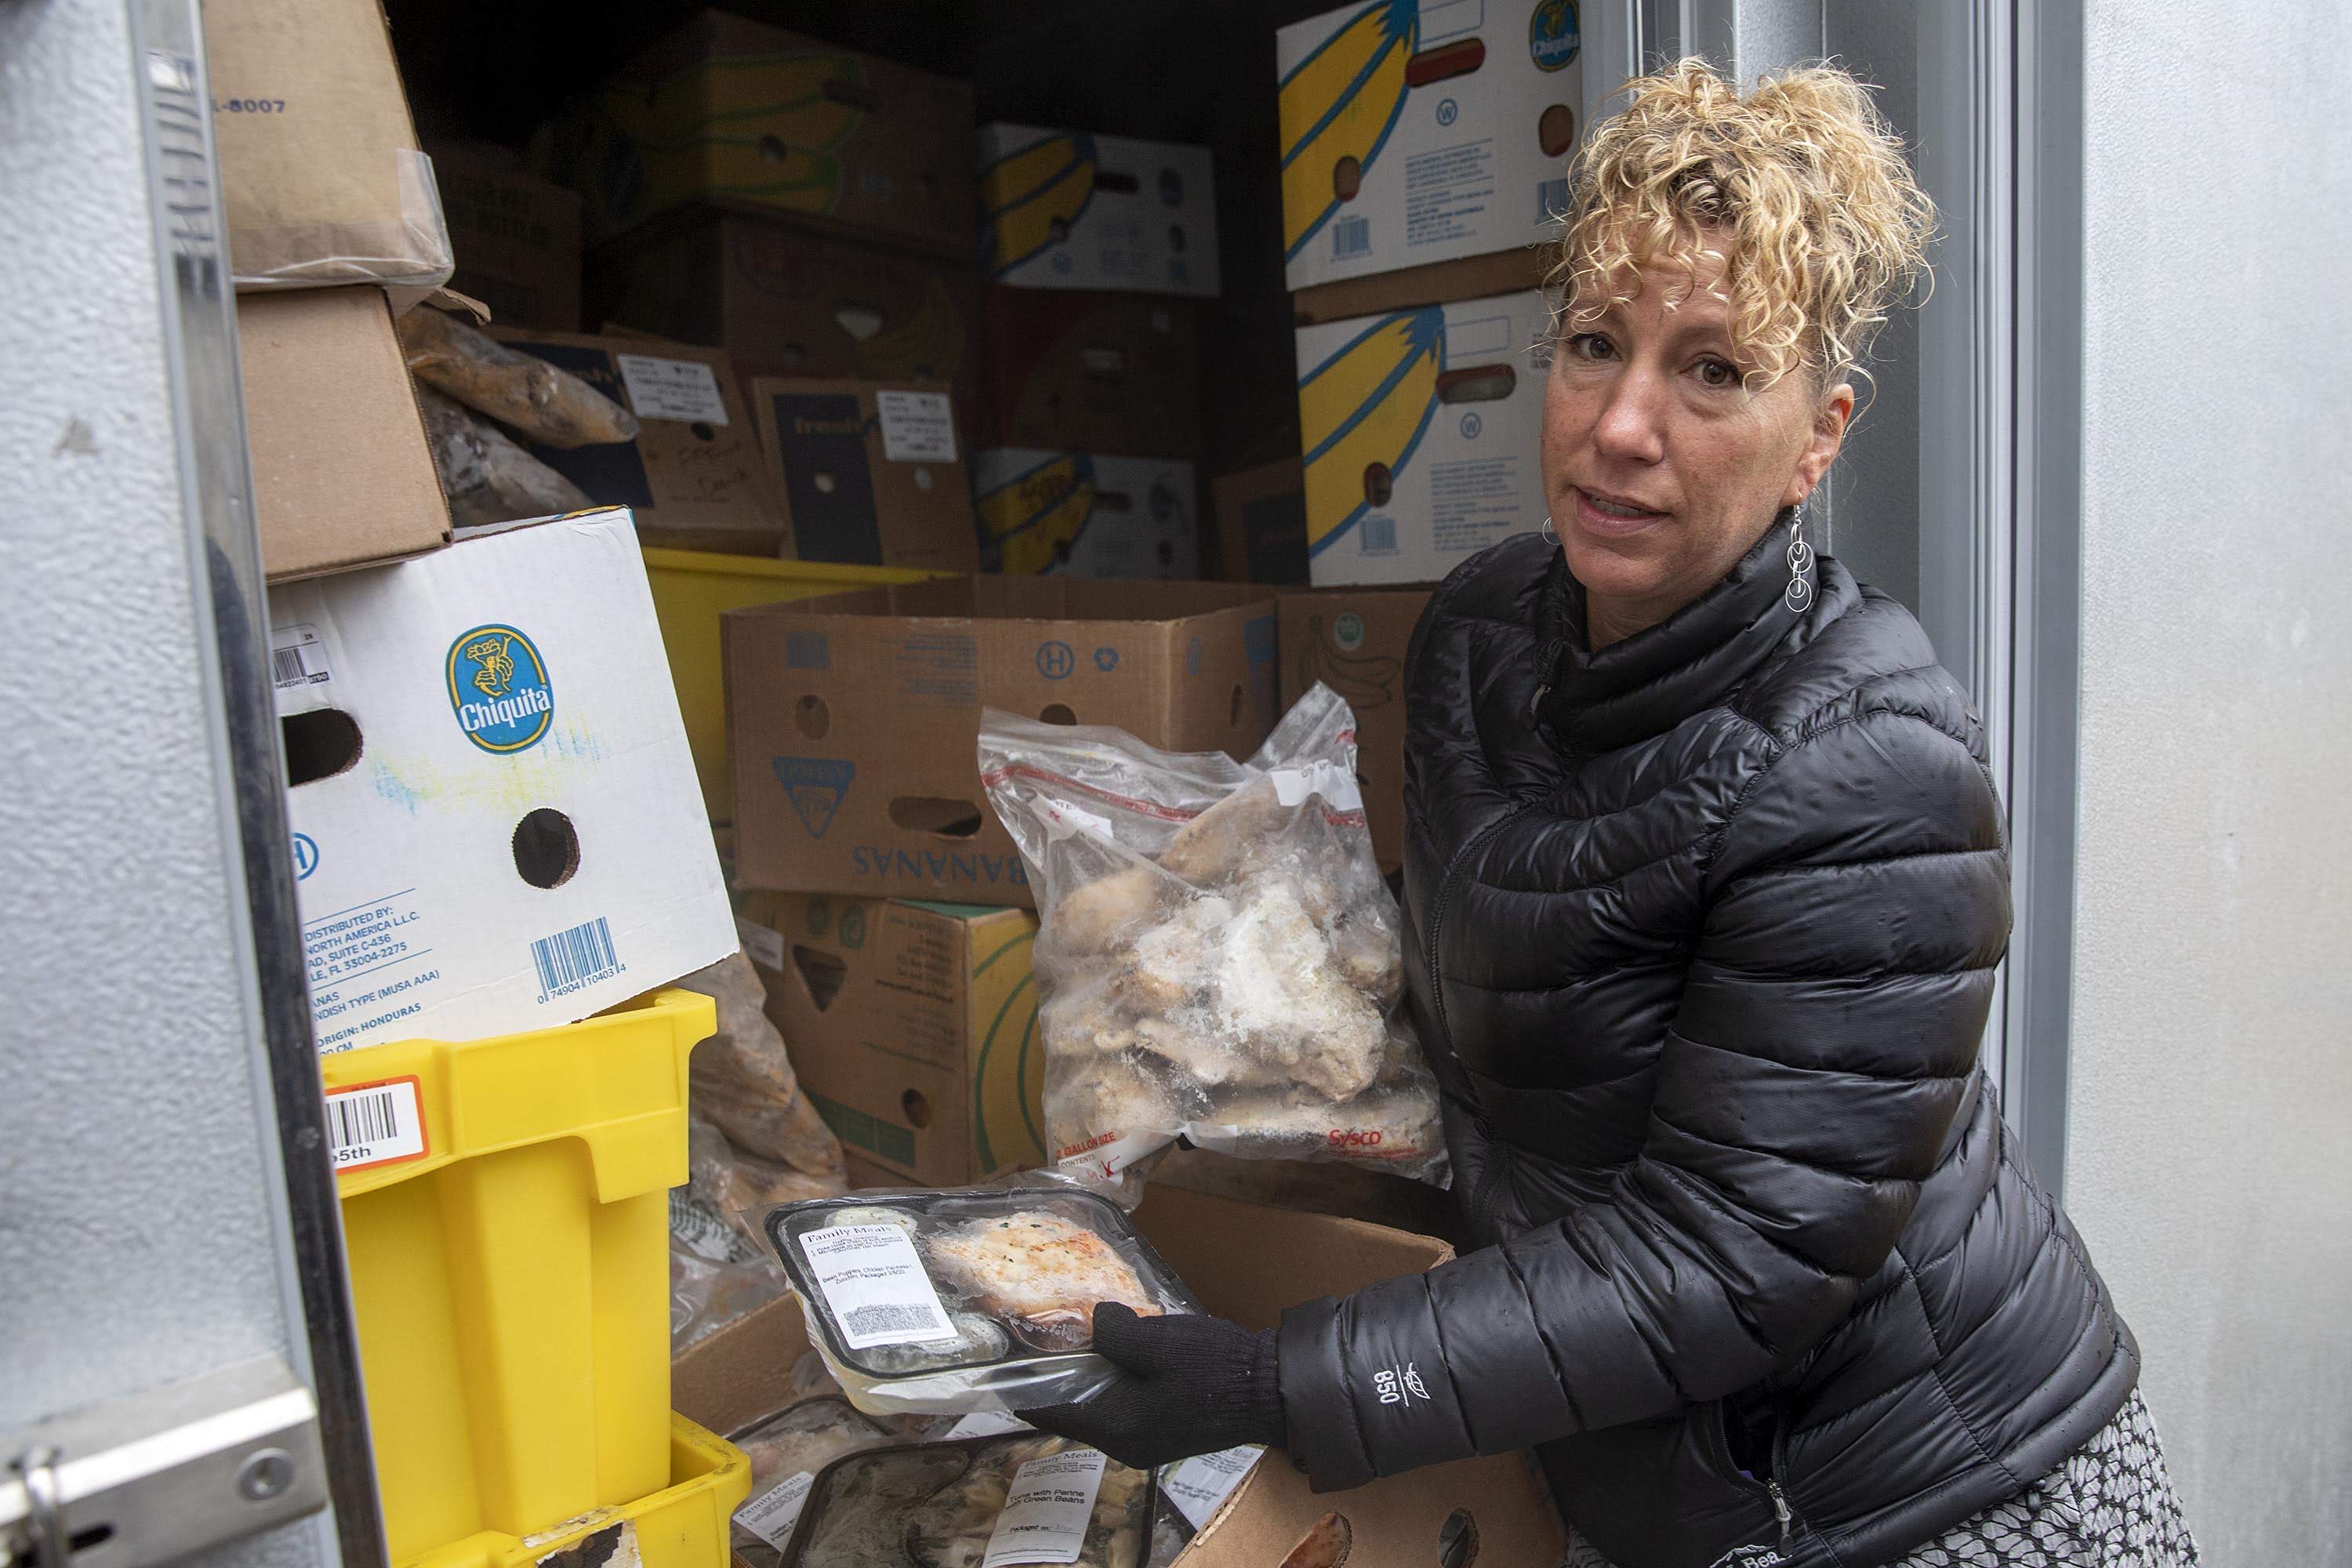 Sasha Purpura, executive director of Food For Free, Cambridge looks through food packages in an organization freezer. (Robin Lubbock/WBUR)